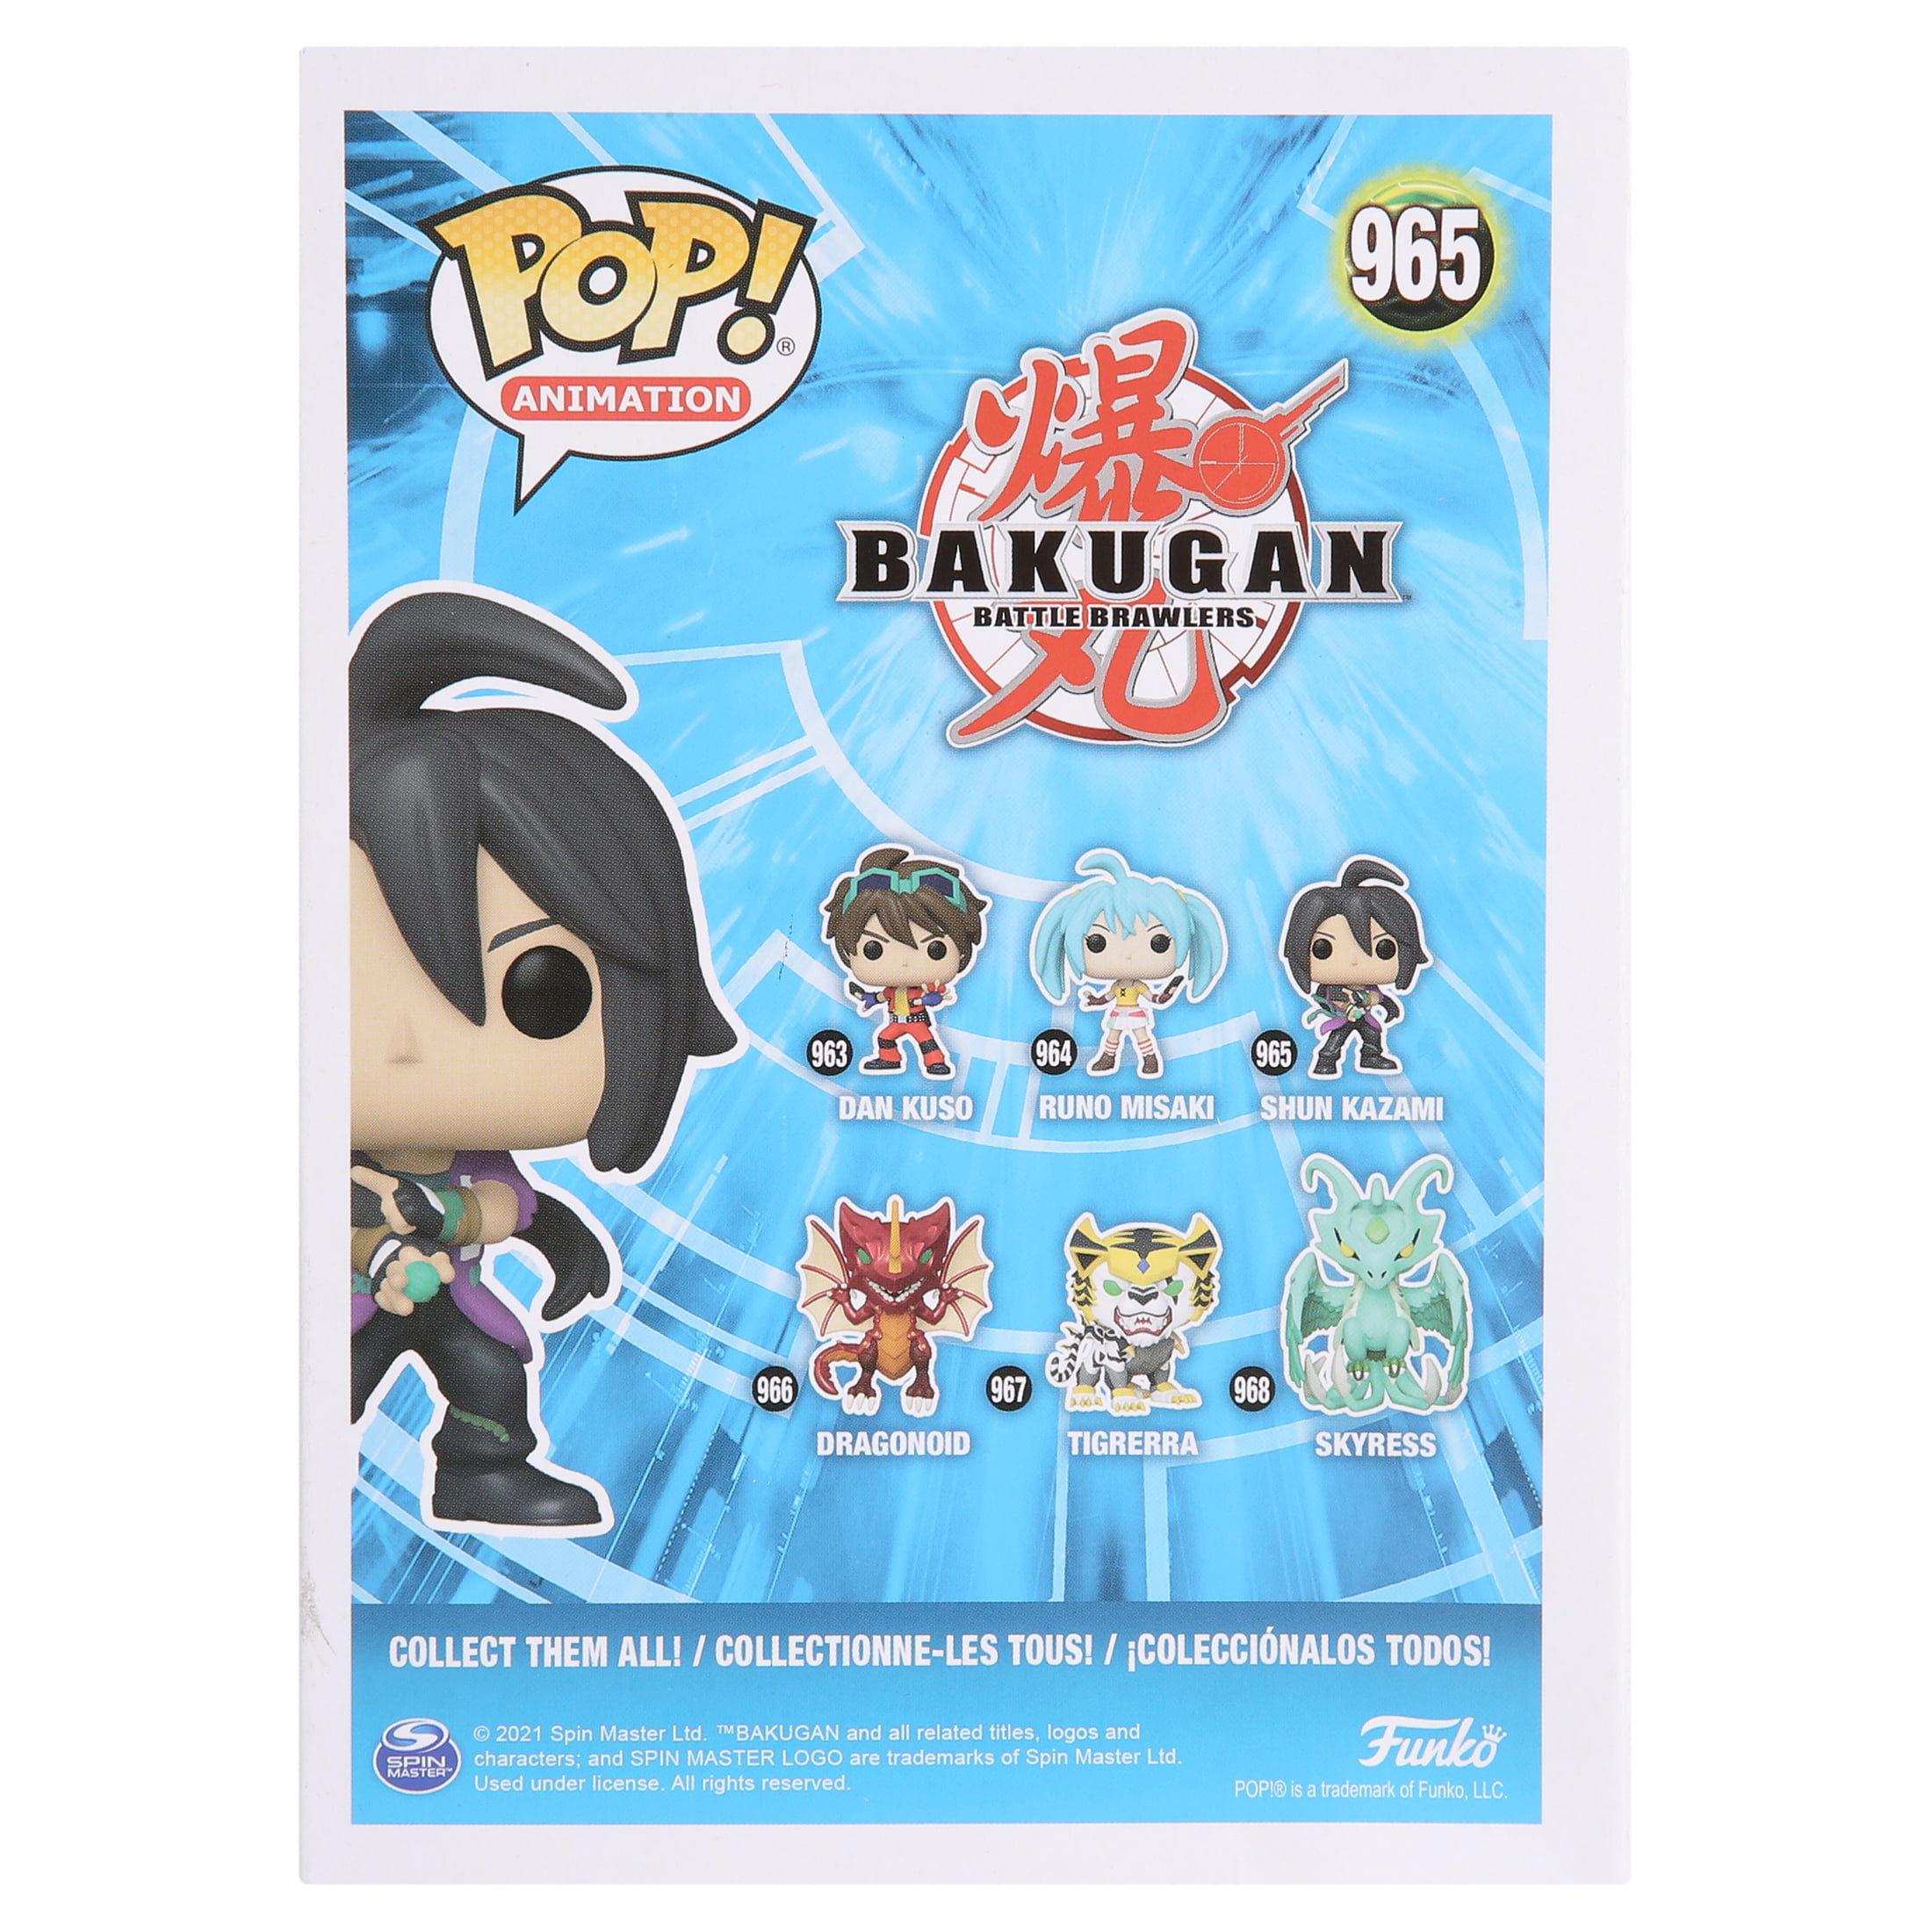 Coming Soon: Pop! Animation - Bakugan! in 2023  Bakugan battle brawlers,  Anime, Pop vinyl figures